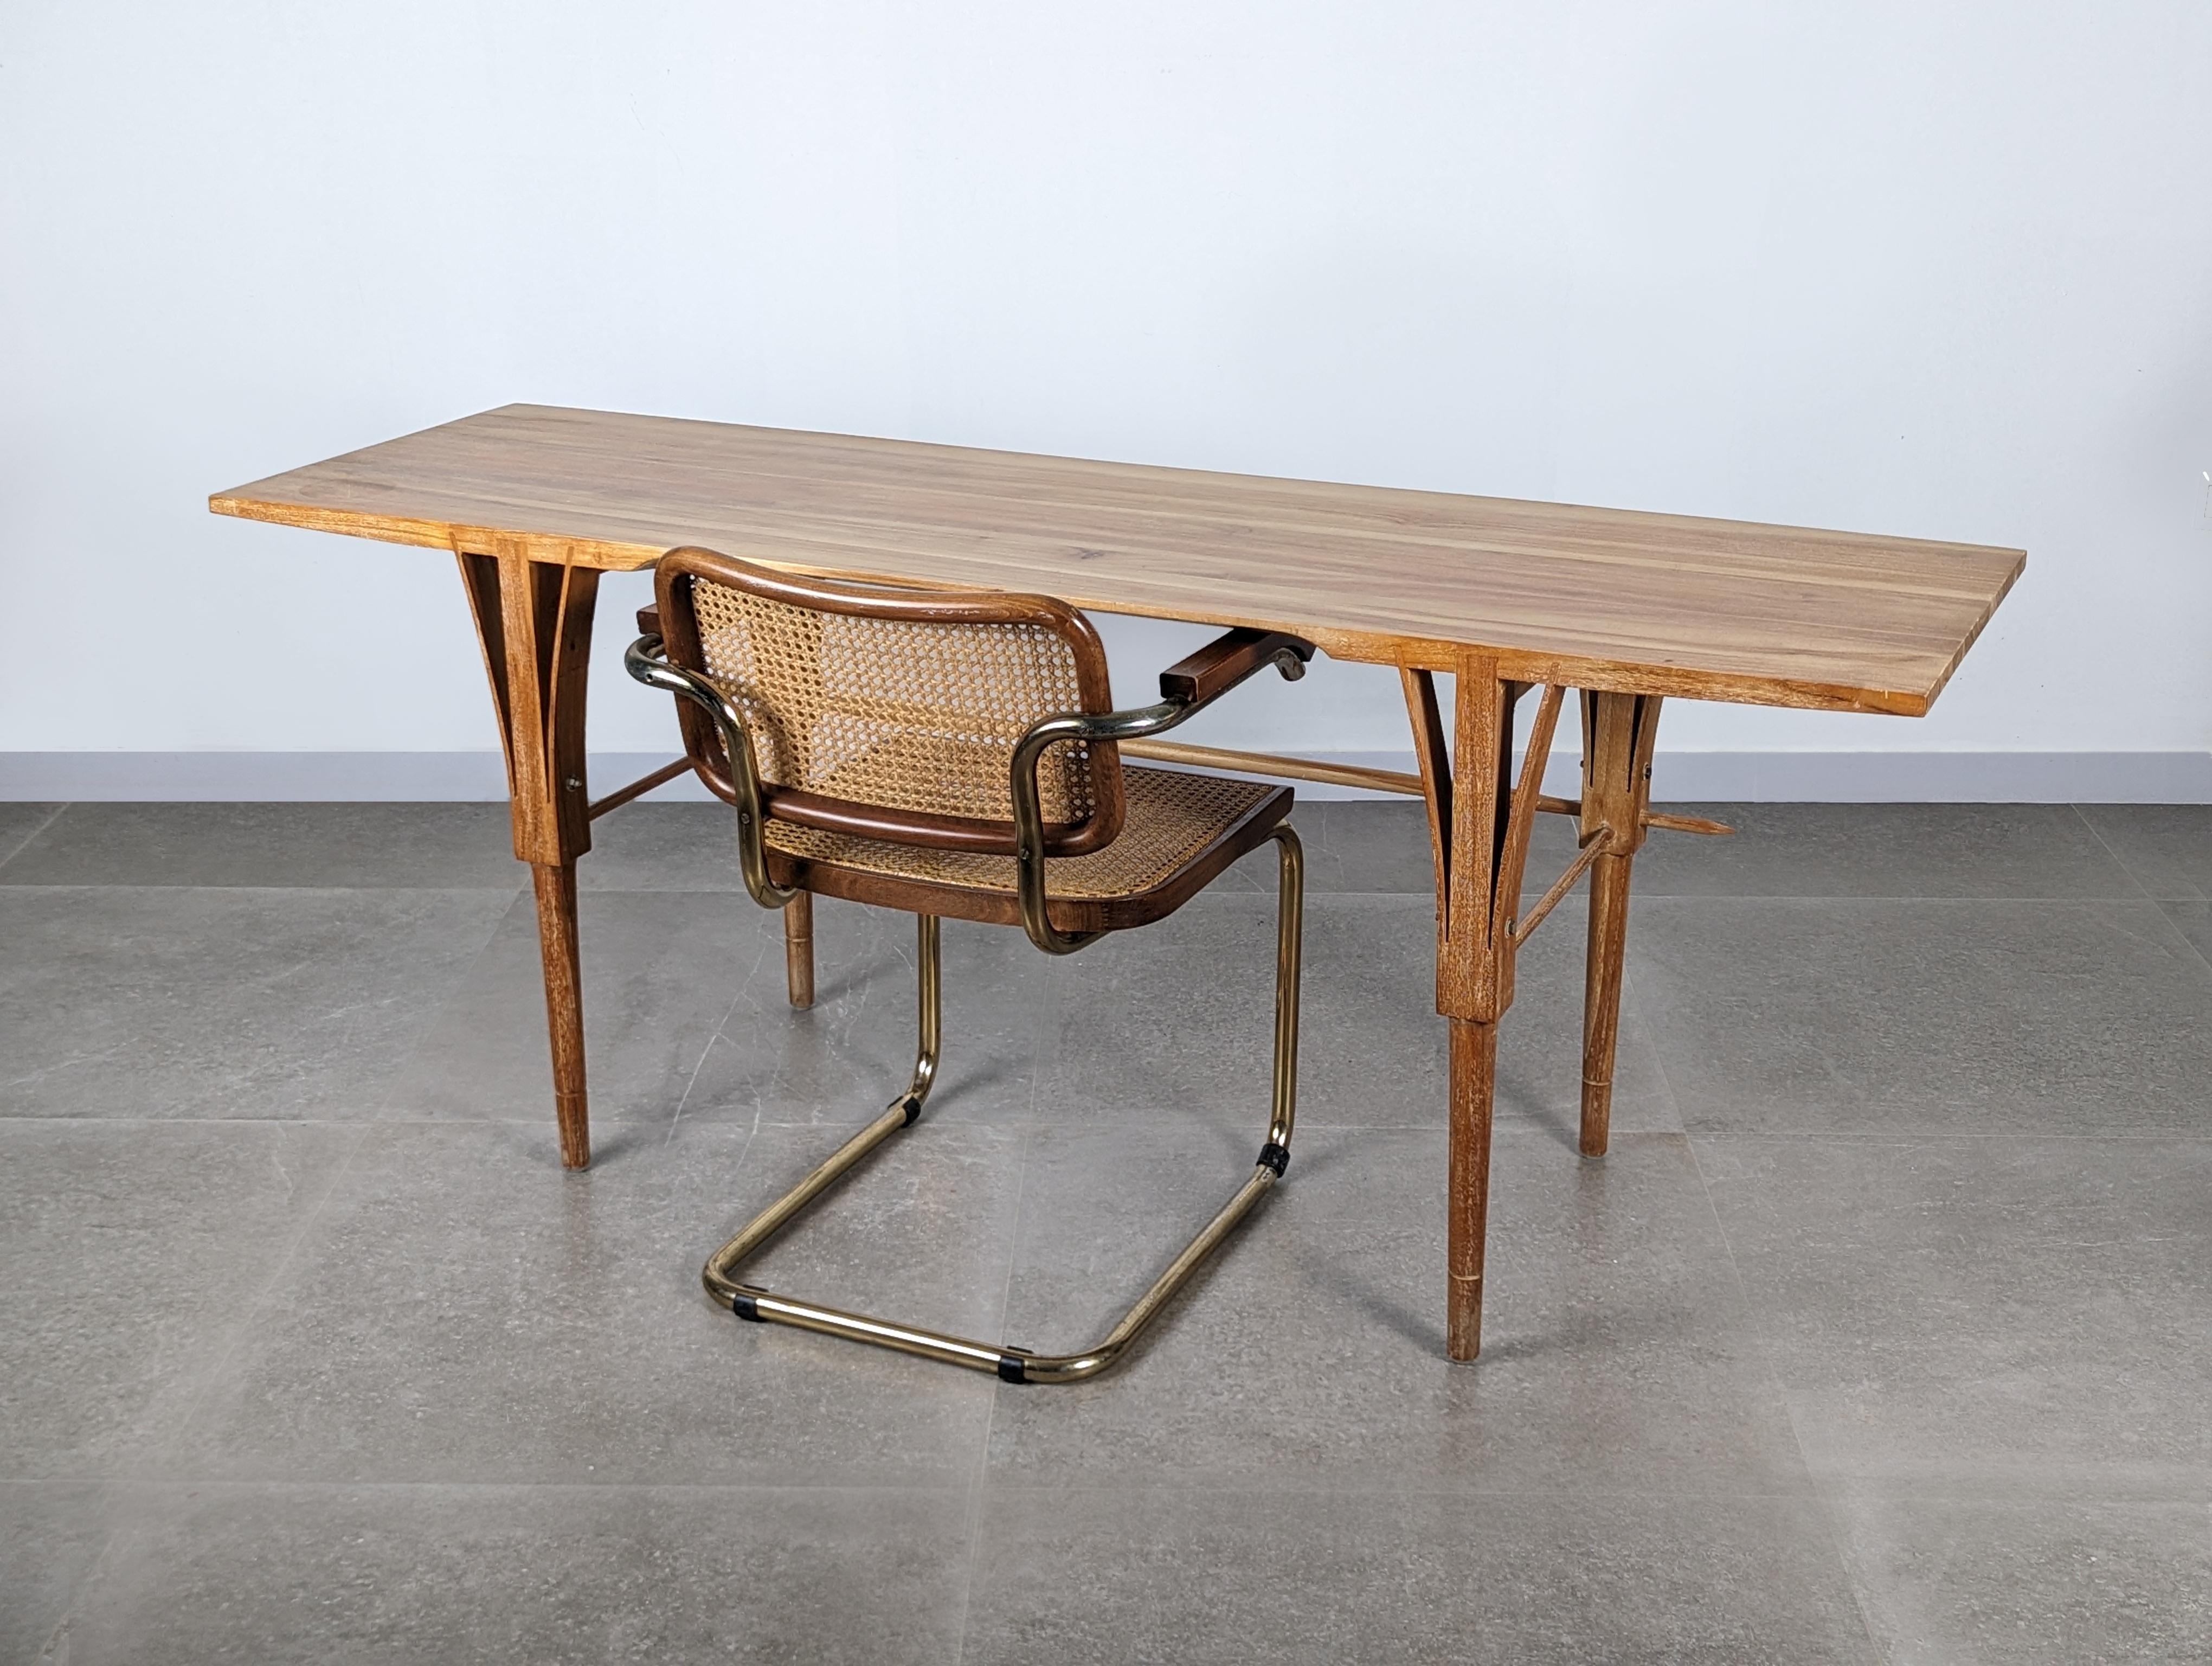 20th Century Danish desk table by Sven Ellekaer 1960s For Sale